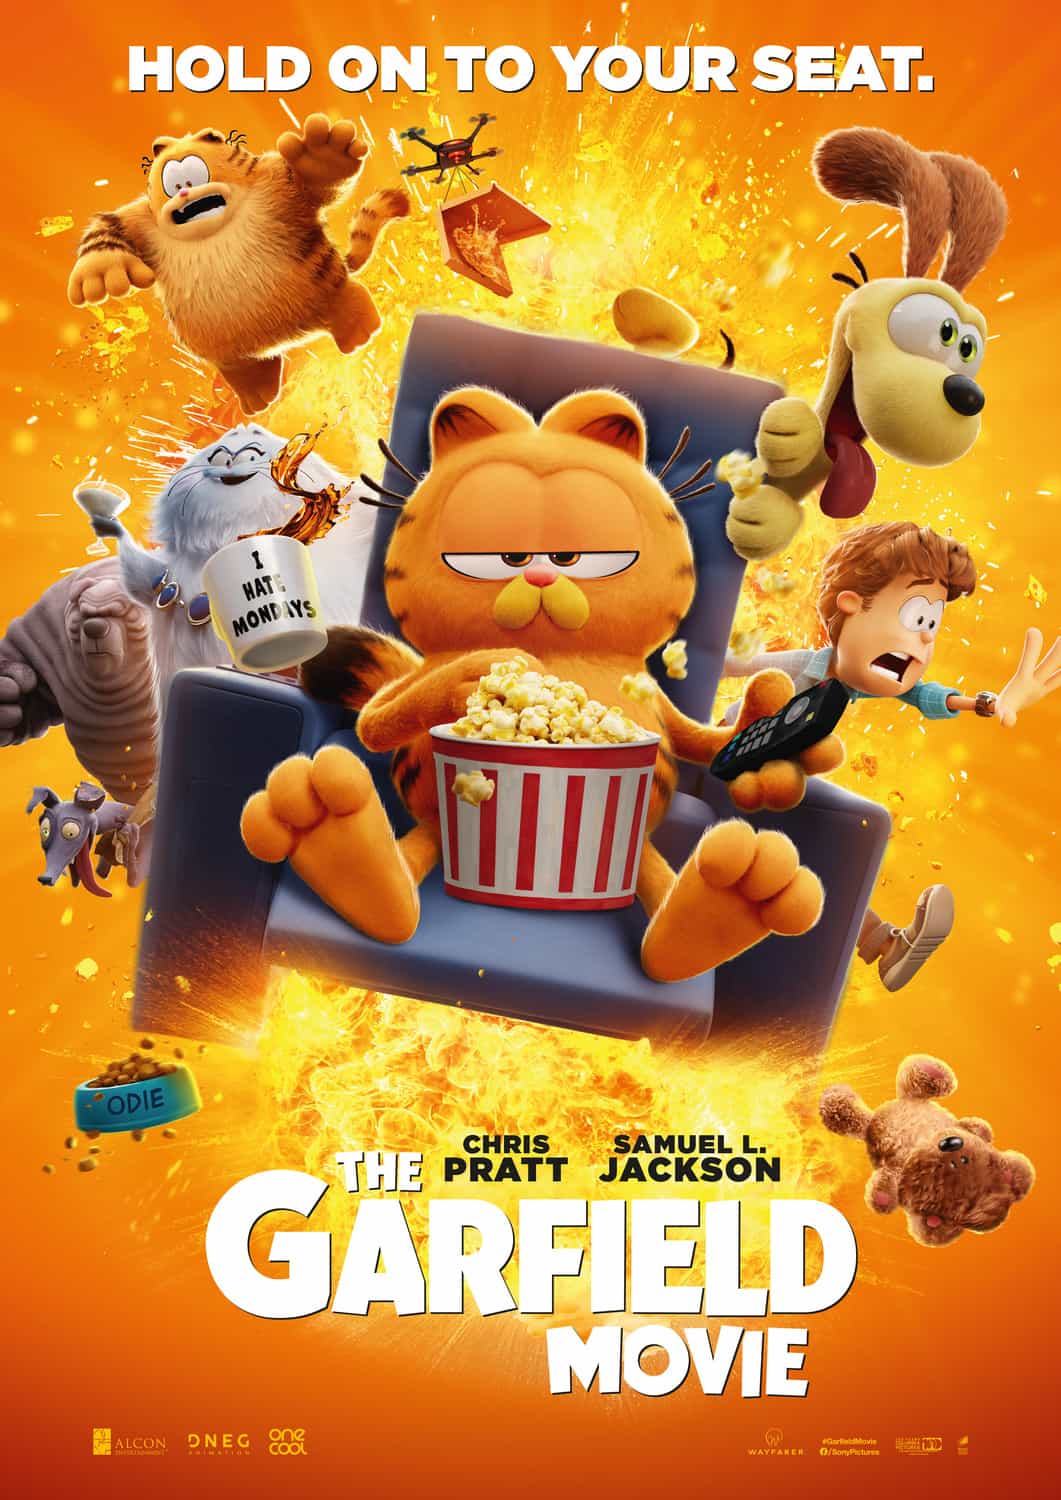 New movie poster release for The Garfield Movie thegarfieldmovie